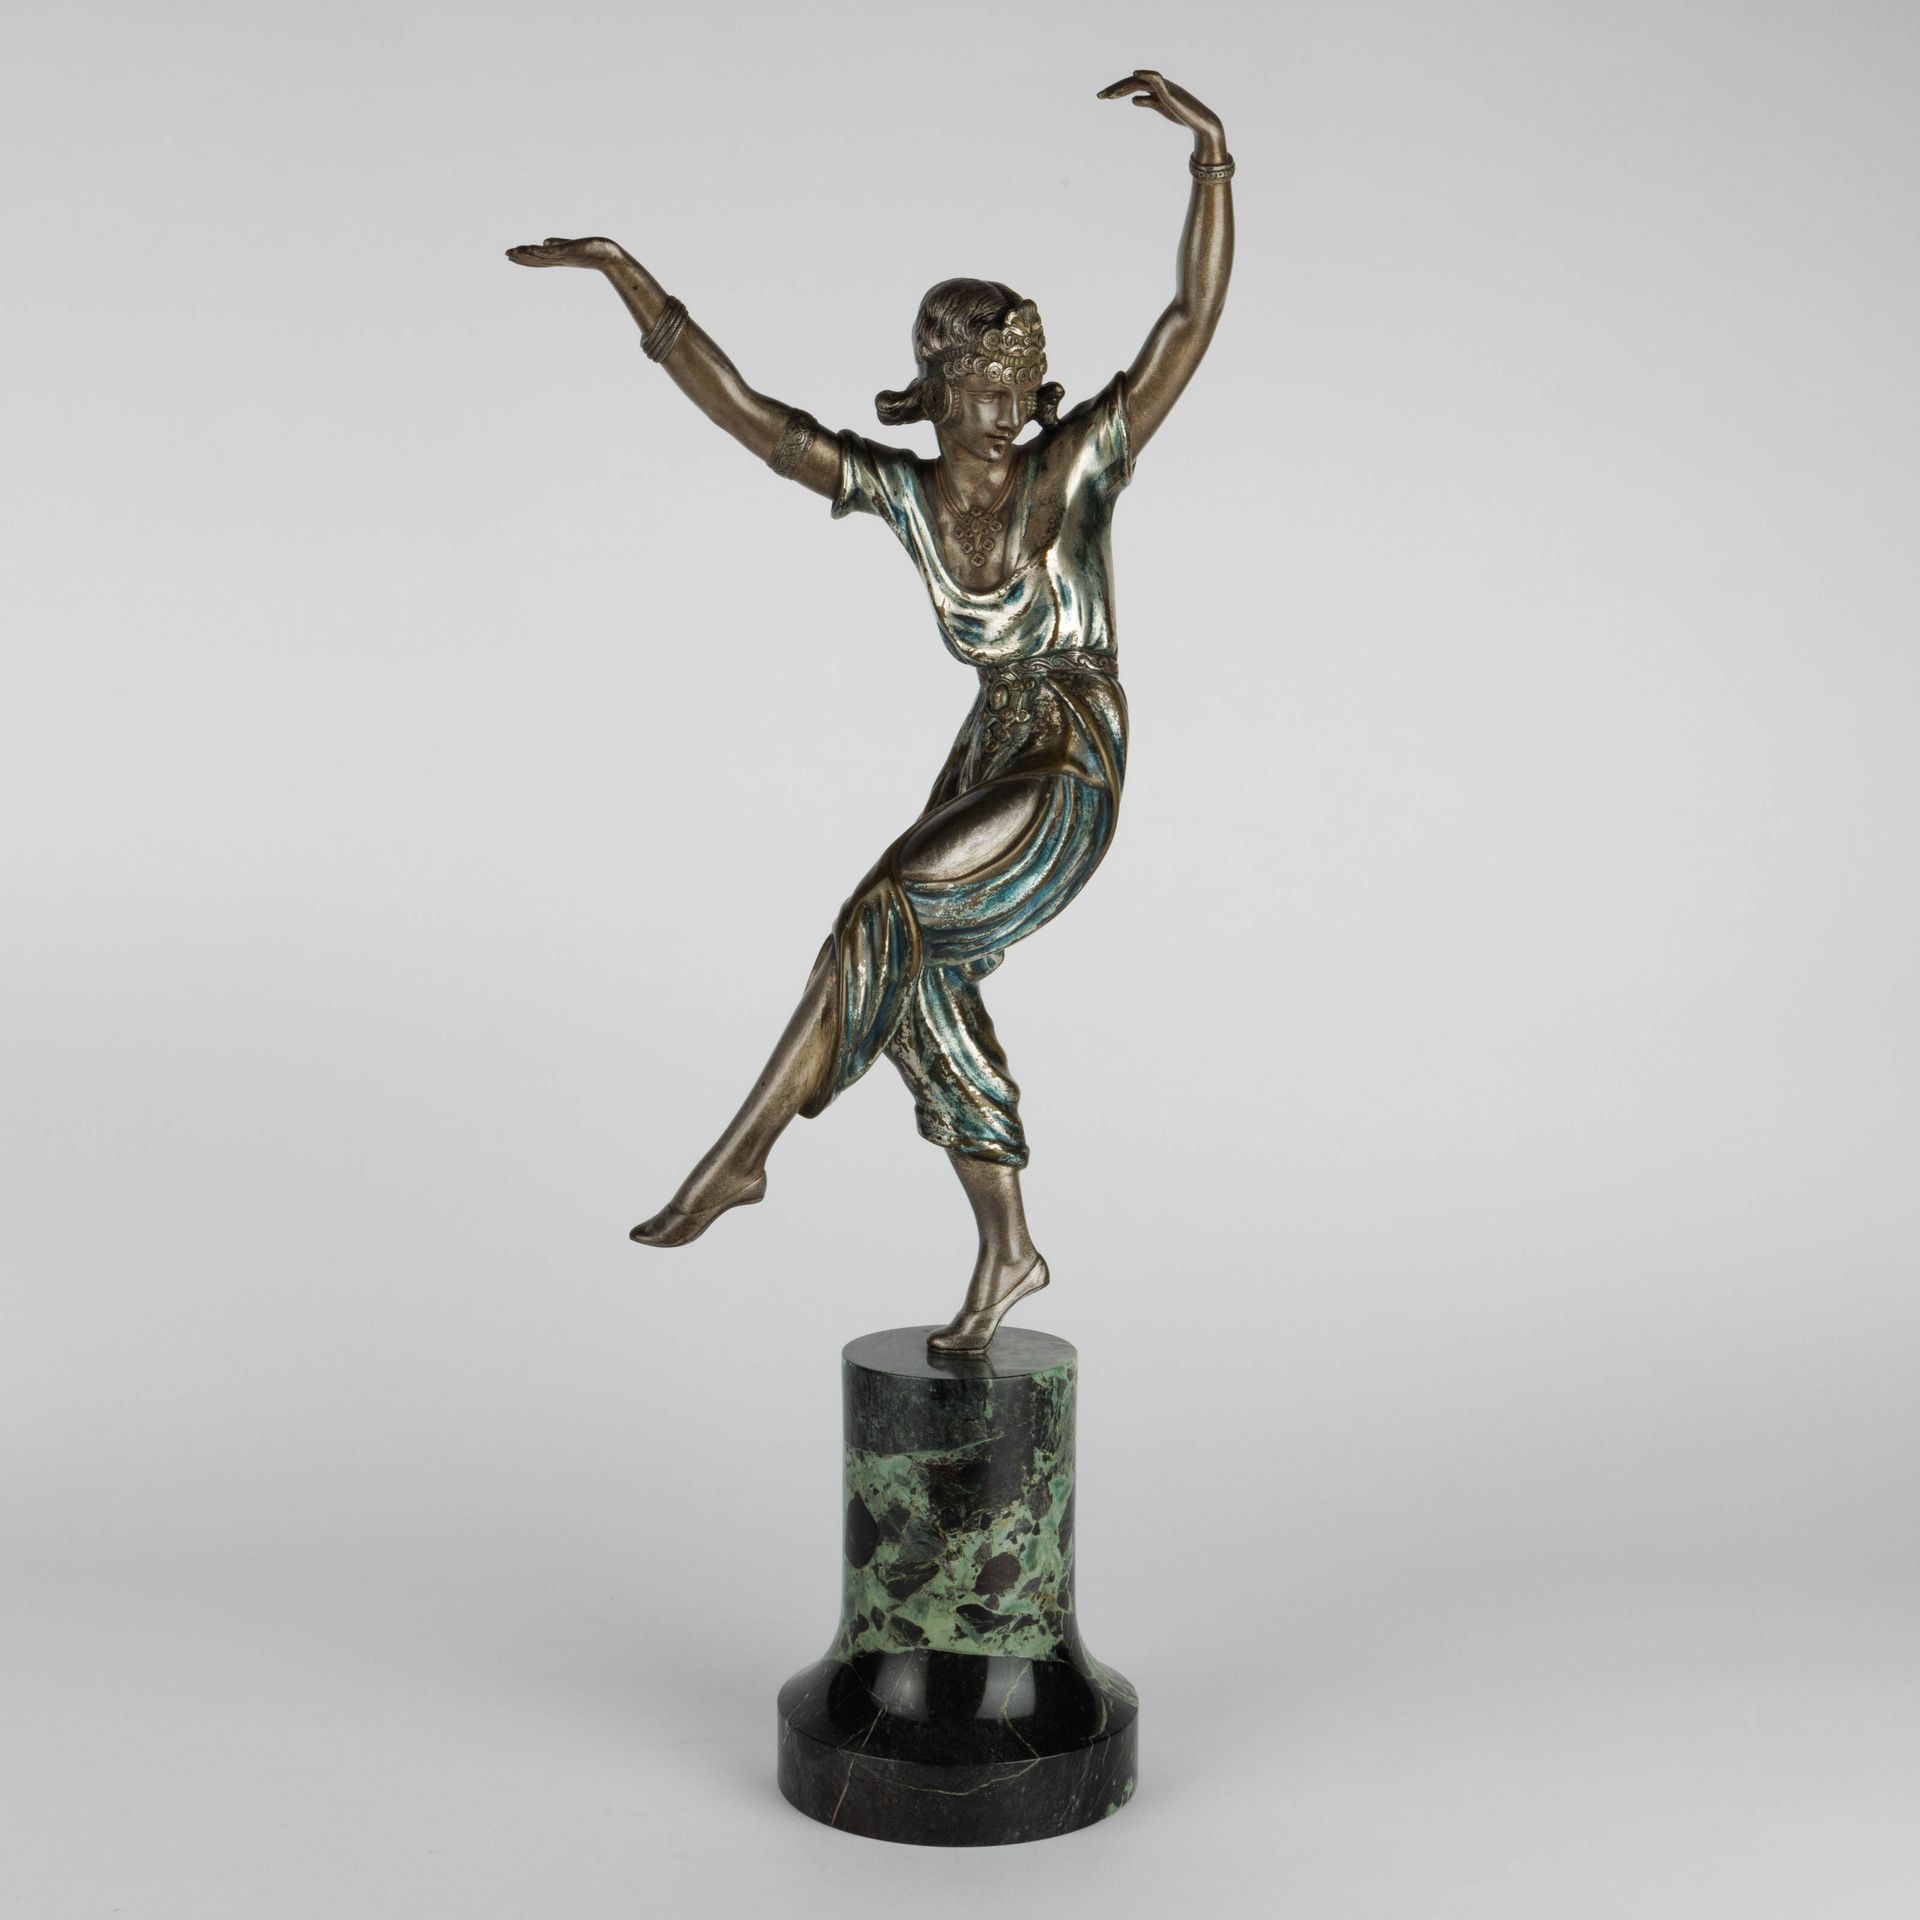 MARCEL BOURAINE (1886-1948) 舞者。装饰艺术时期。
青铜，灰色铜锈。署名 "Matto"。铜锈脱落。 
大理石基座。
高：57.5 厘&hellip;